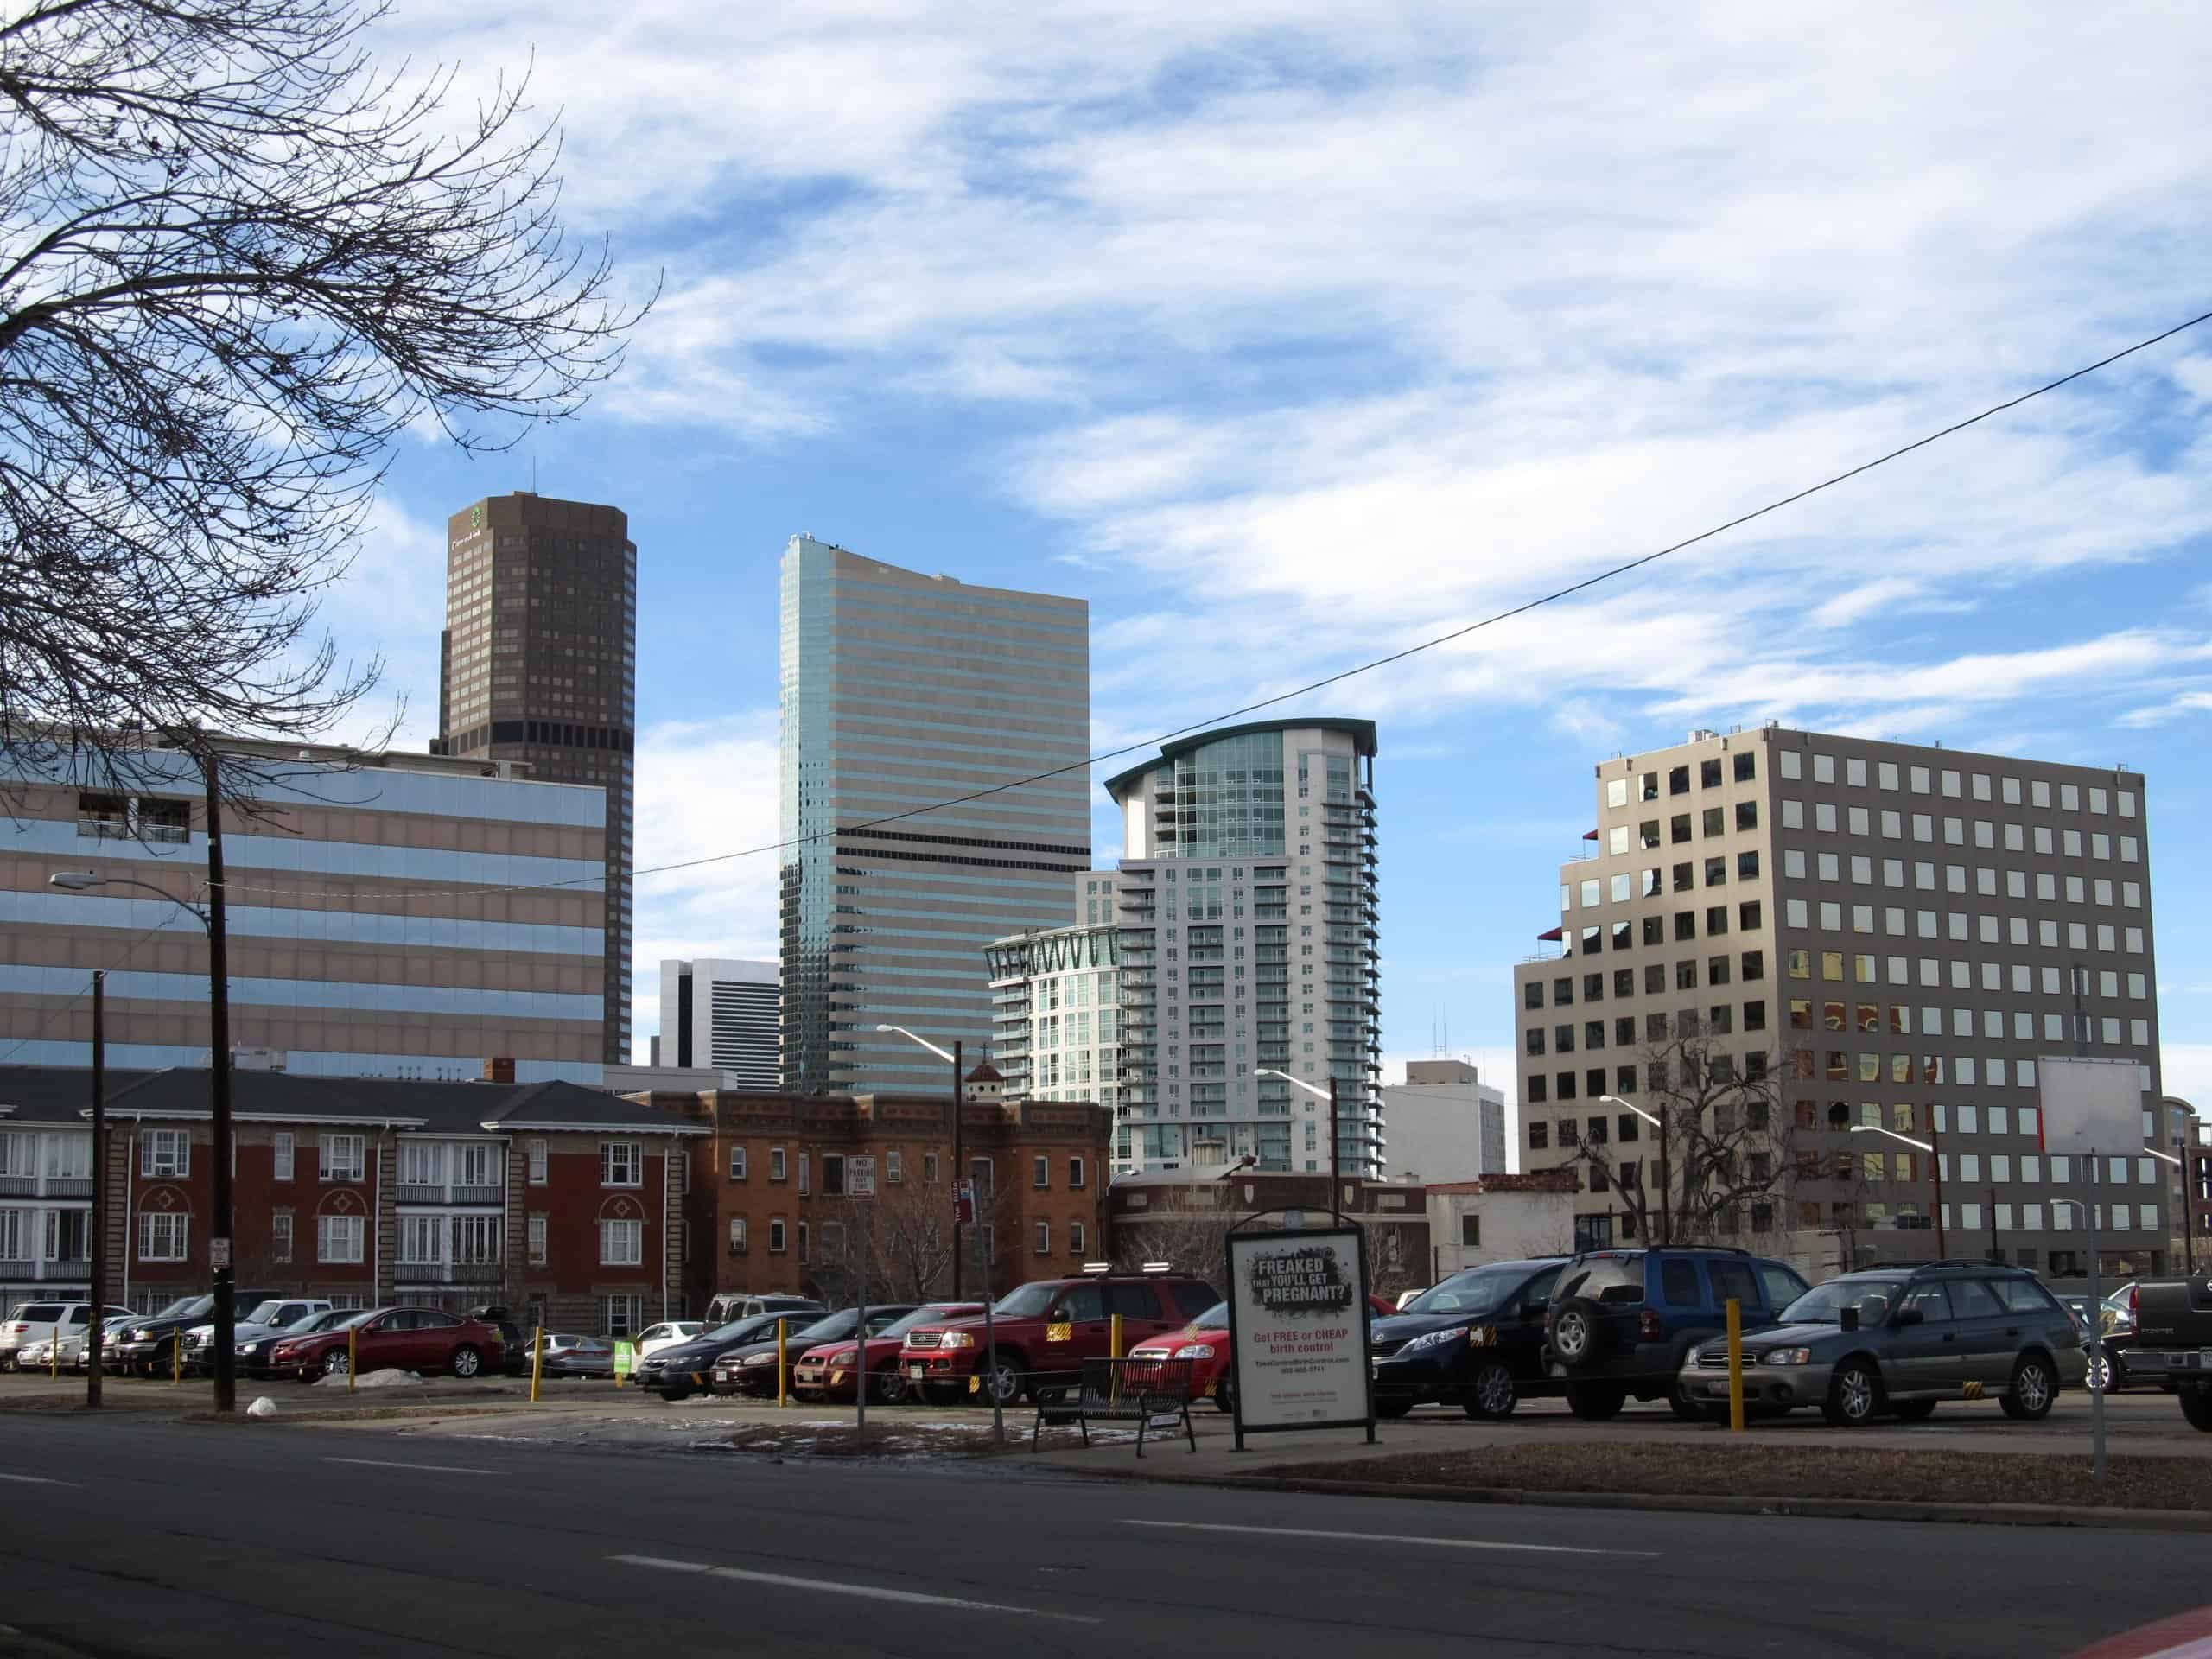 Downtown Denver, Colorado by Ken Lund